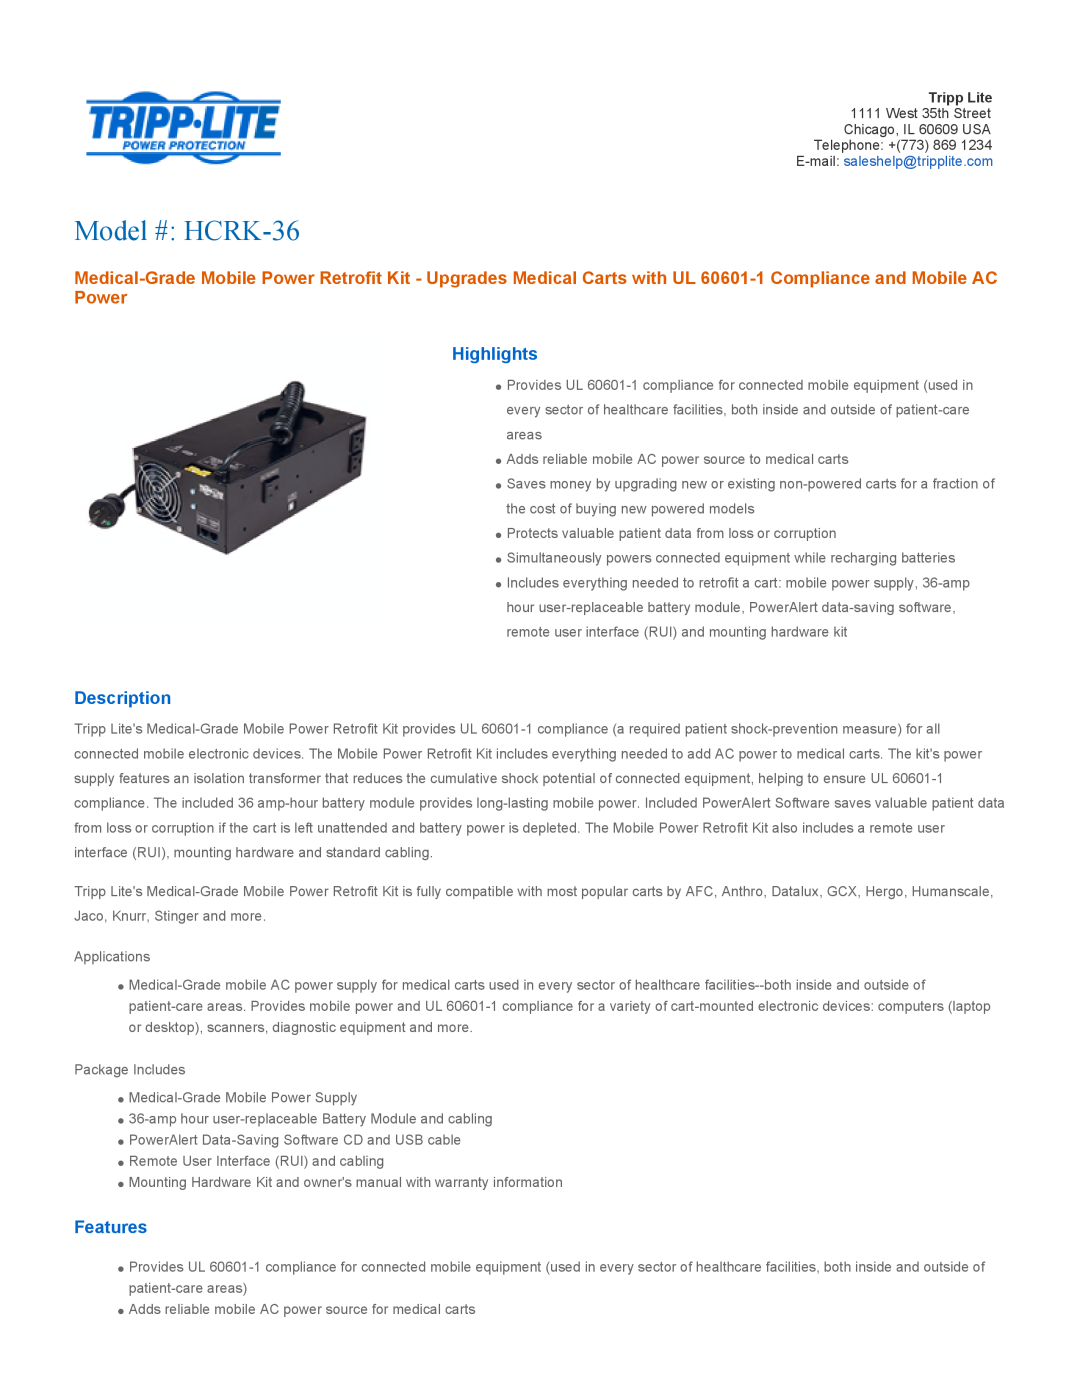 Tripp Lite owner manual Highlights, Description, Features, Model # HCRK-36 